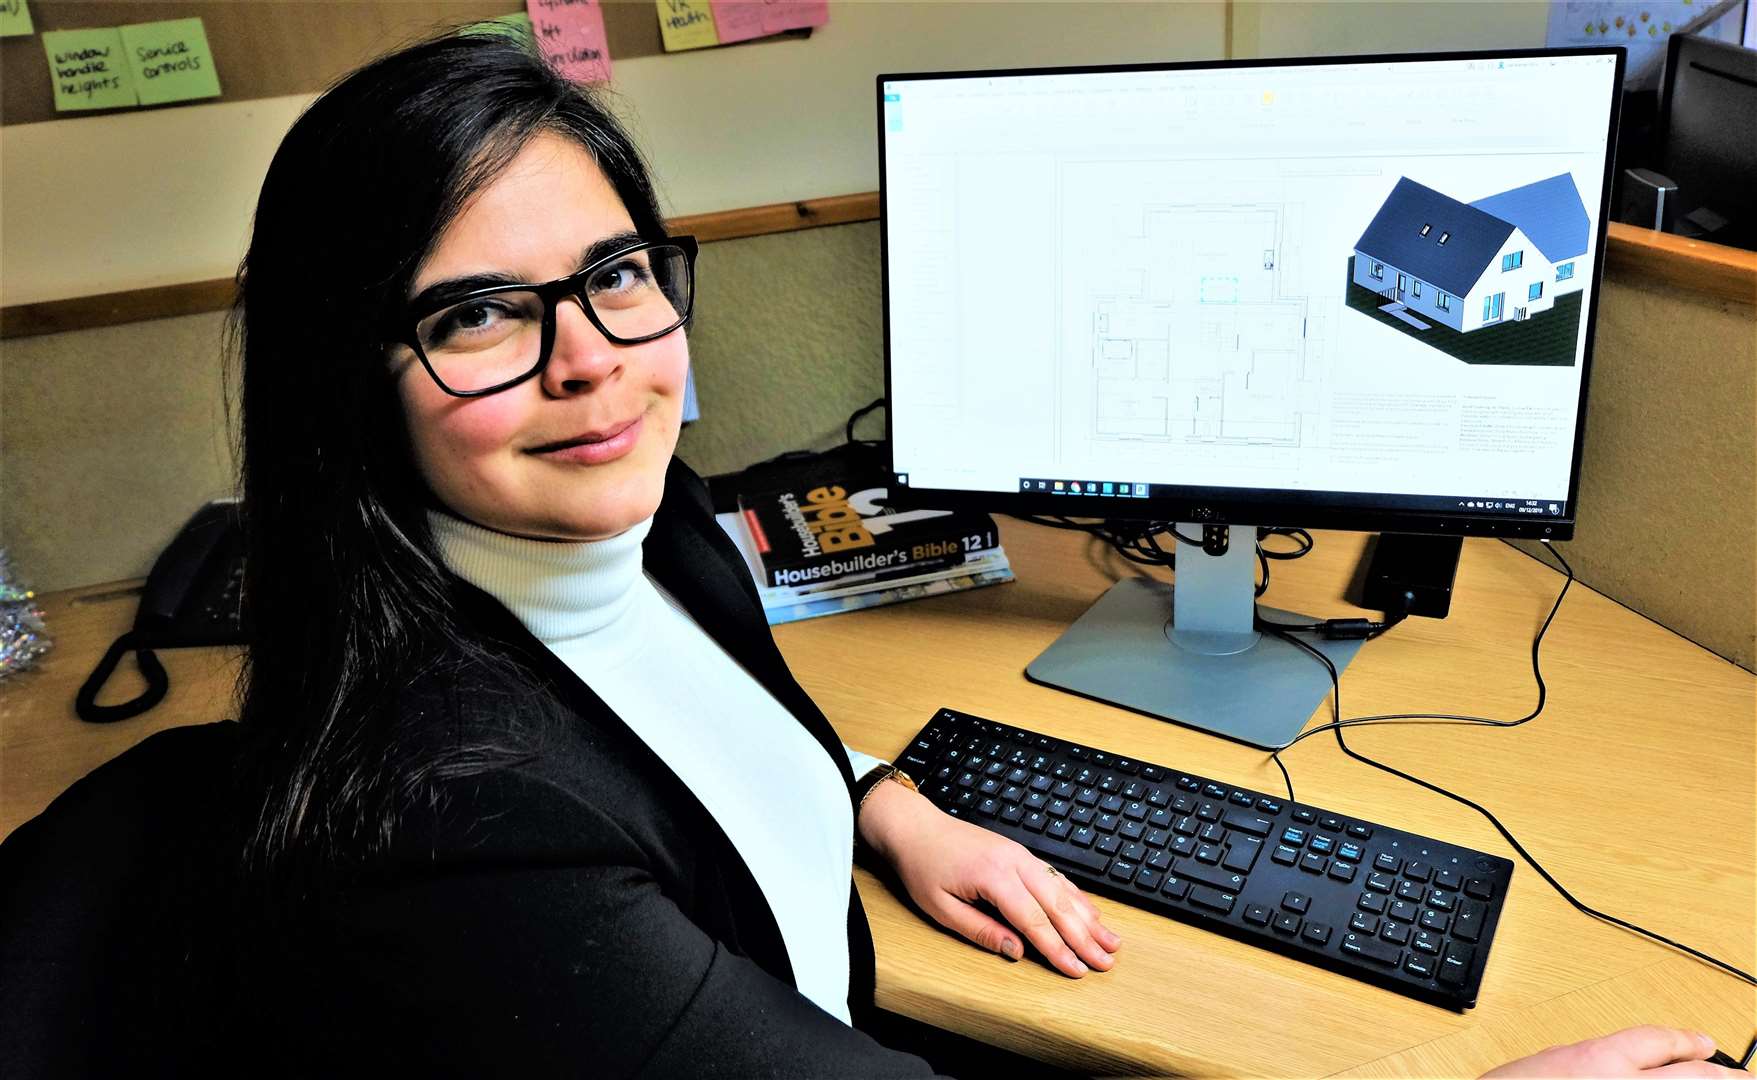 Norscot’s KTP Associate Carla Resendiz Villaseñor was awarded the Future Leader Award.